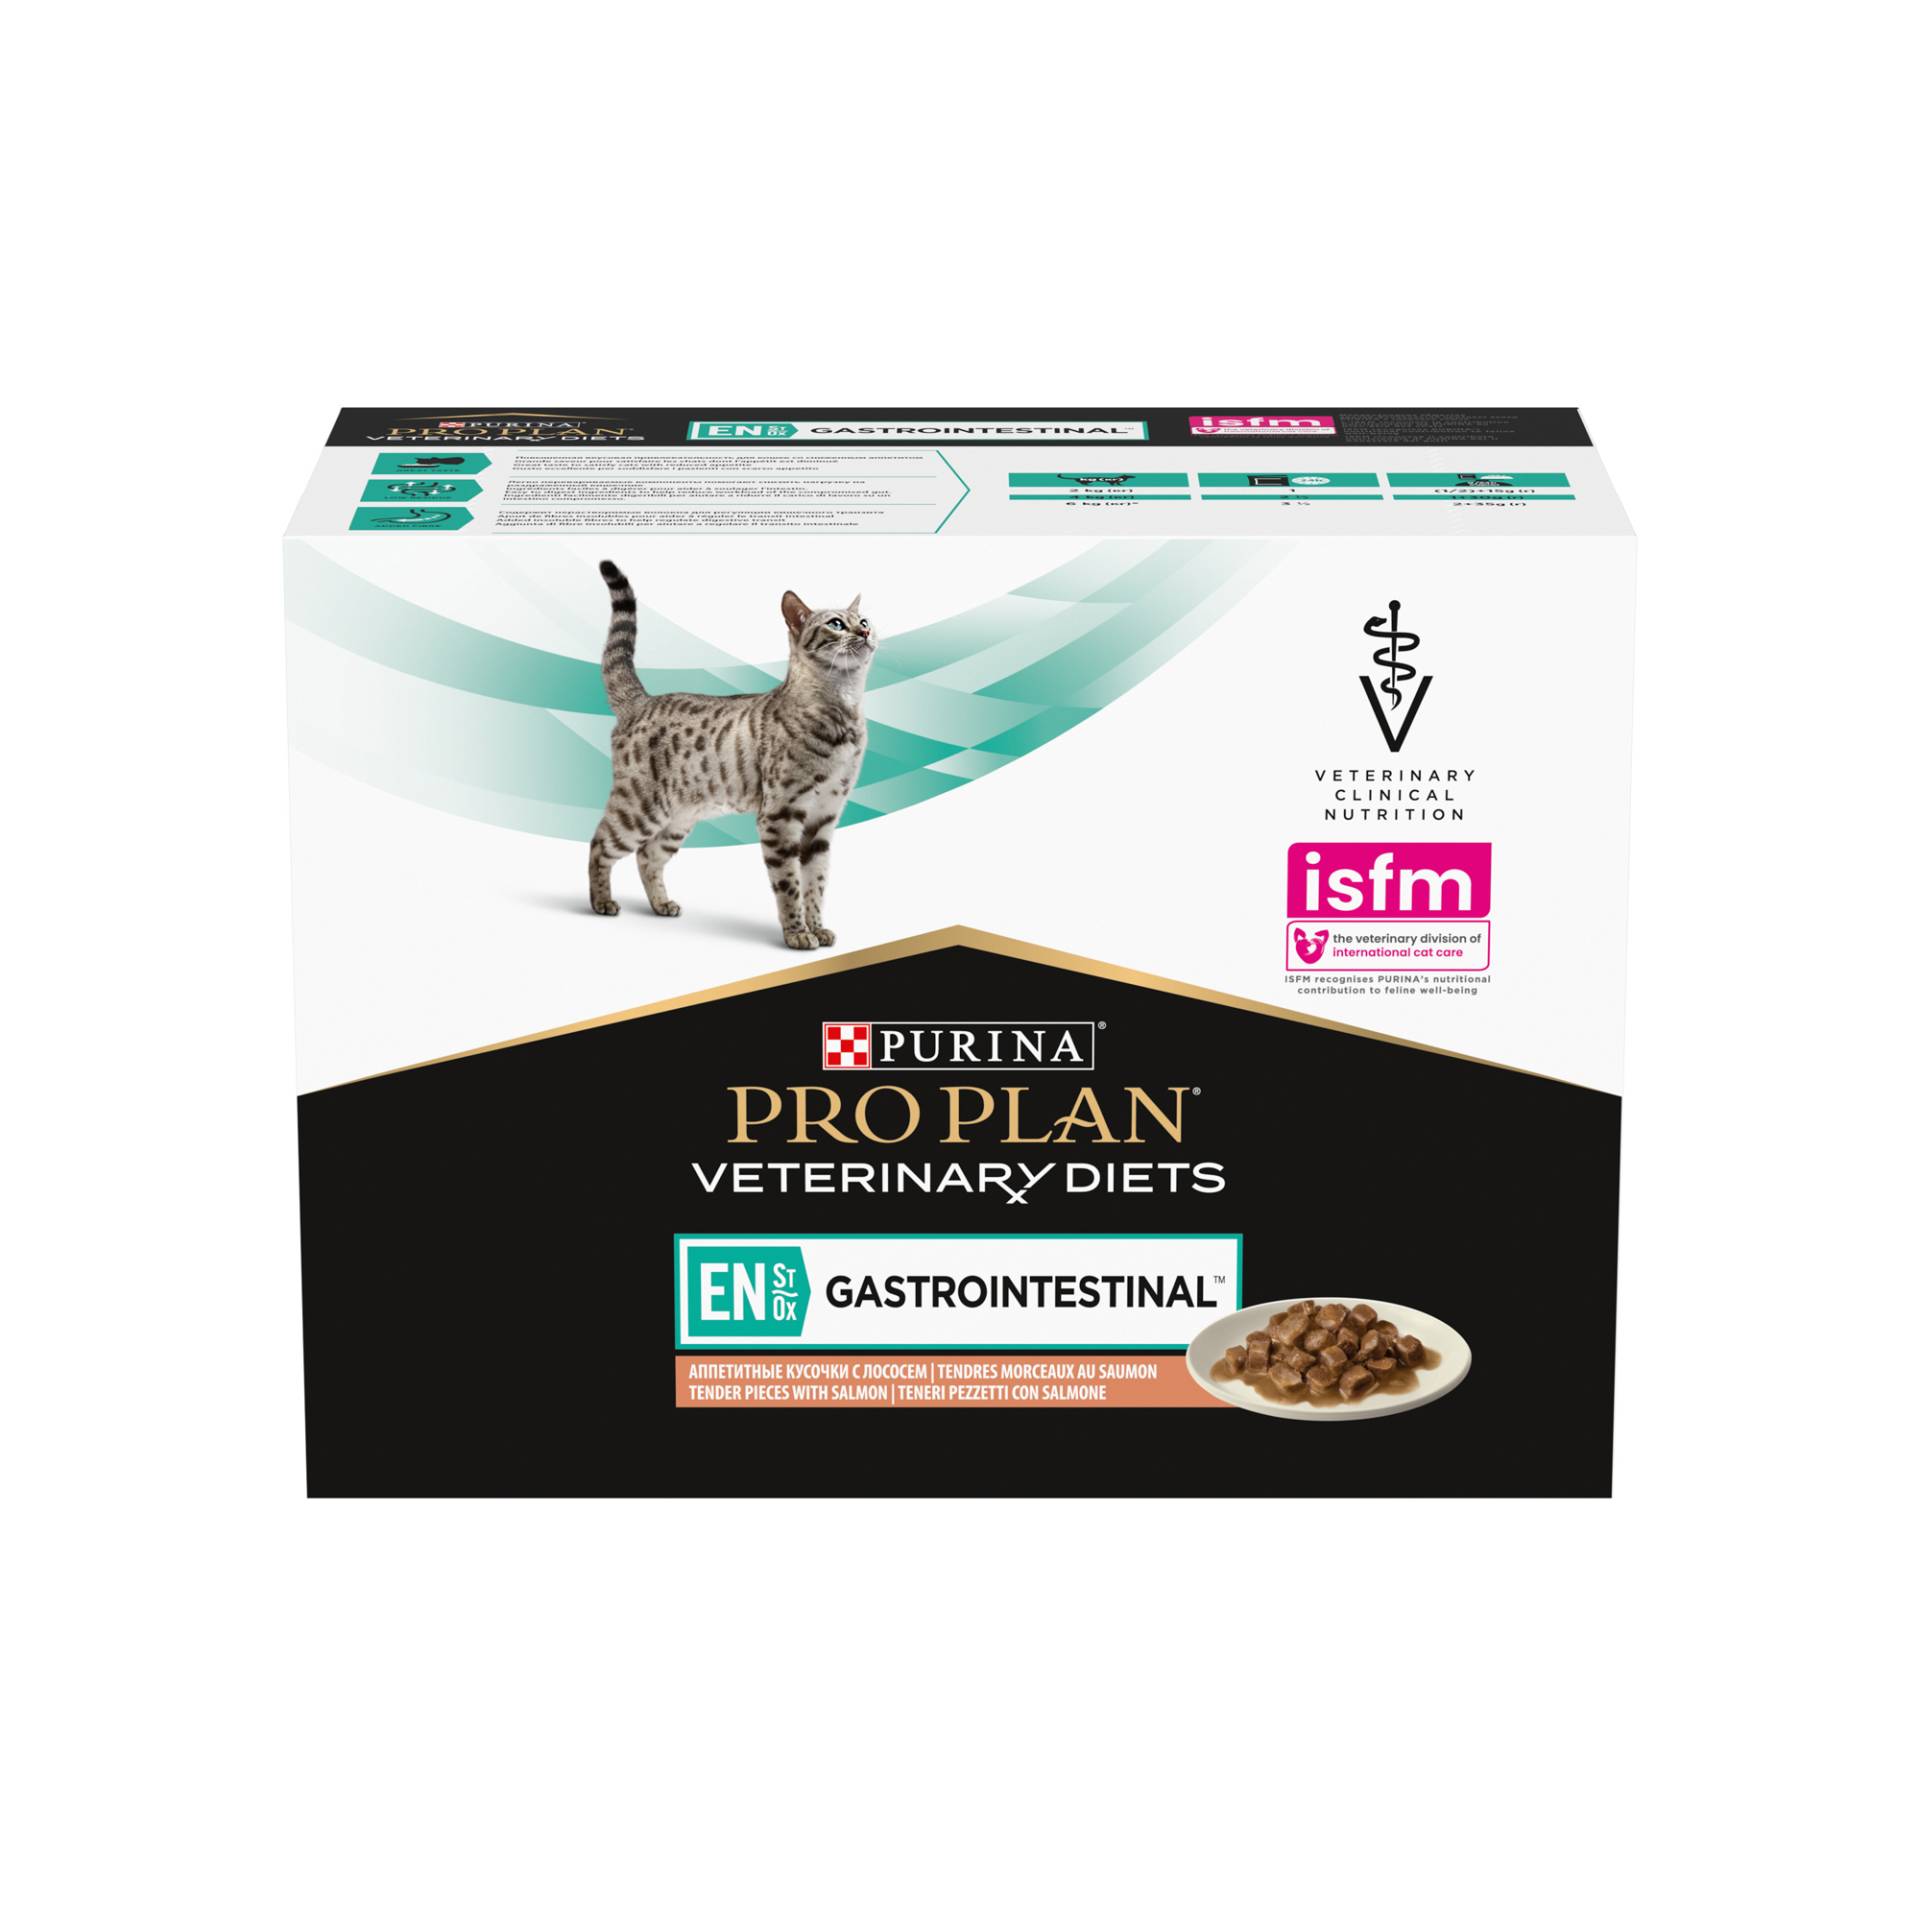 Purina Pro Plan VD EN Gastrointesinal Katze Lachs - 10 x 85 g von Purina